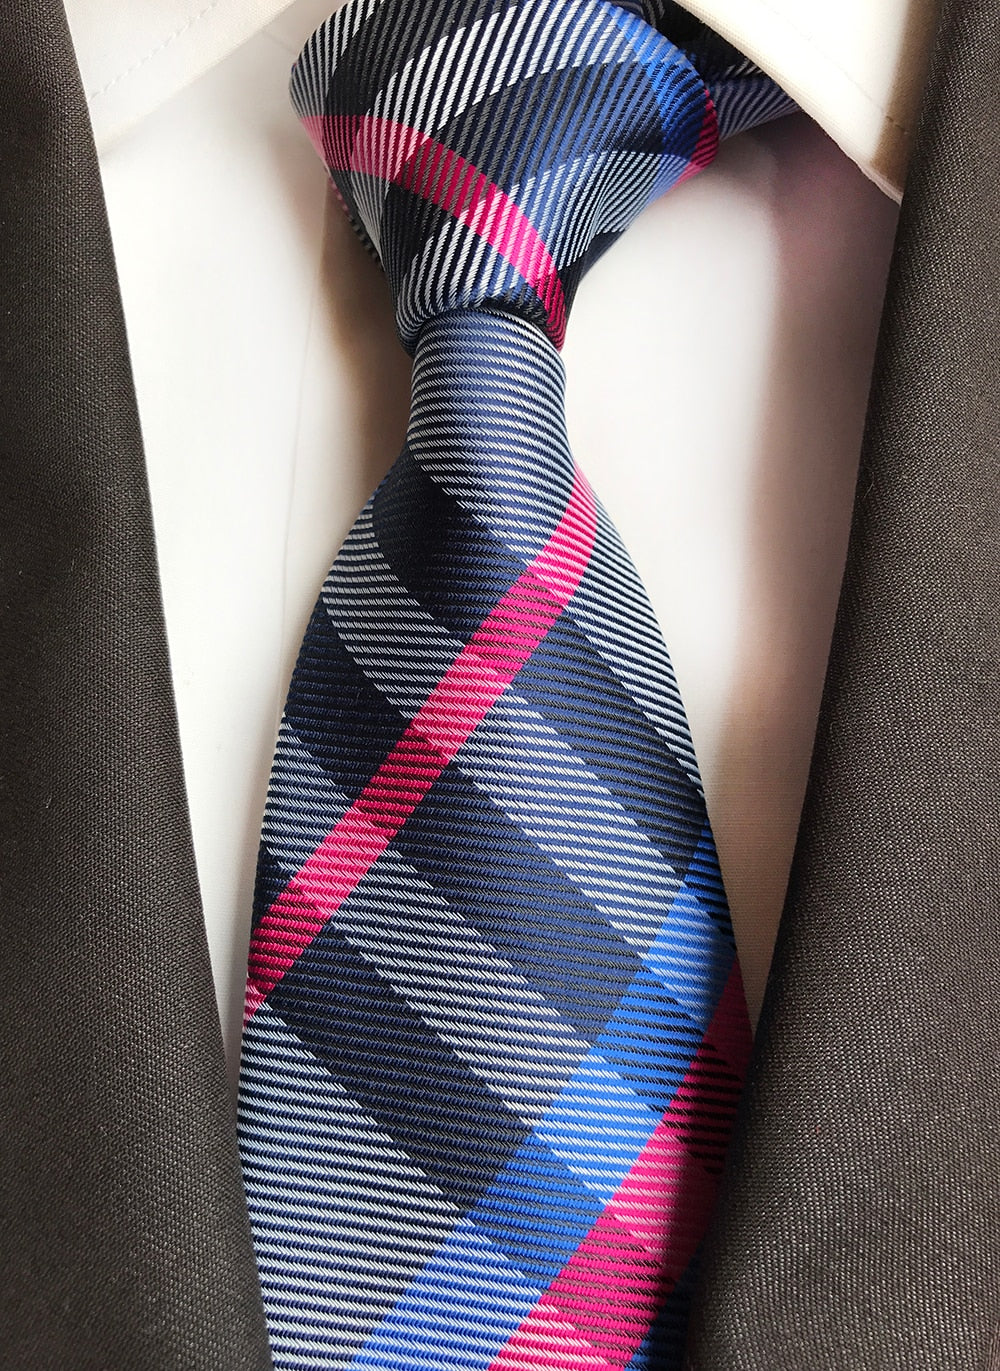 Luxury 8cm Men's Classic Tie Silk Jacquard Cravatta Floral Plaids Necktie Striped Ties Man Business Wedding Accessories The Clothing Company Sydney